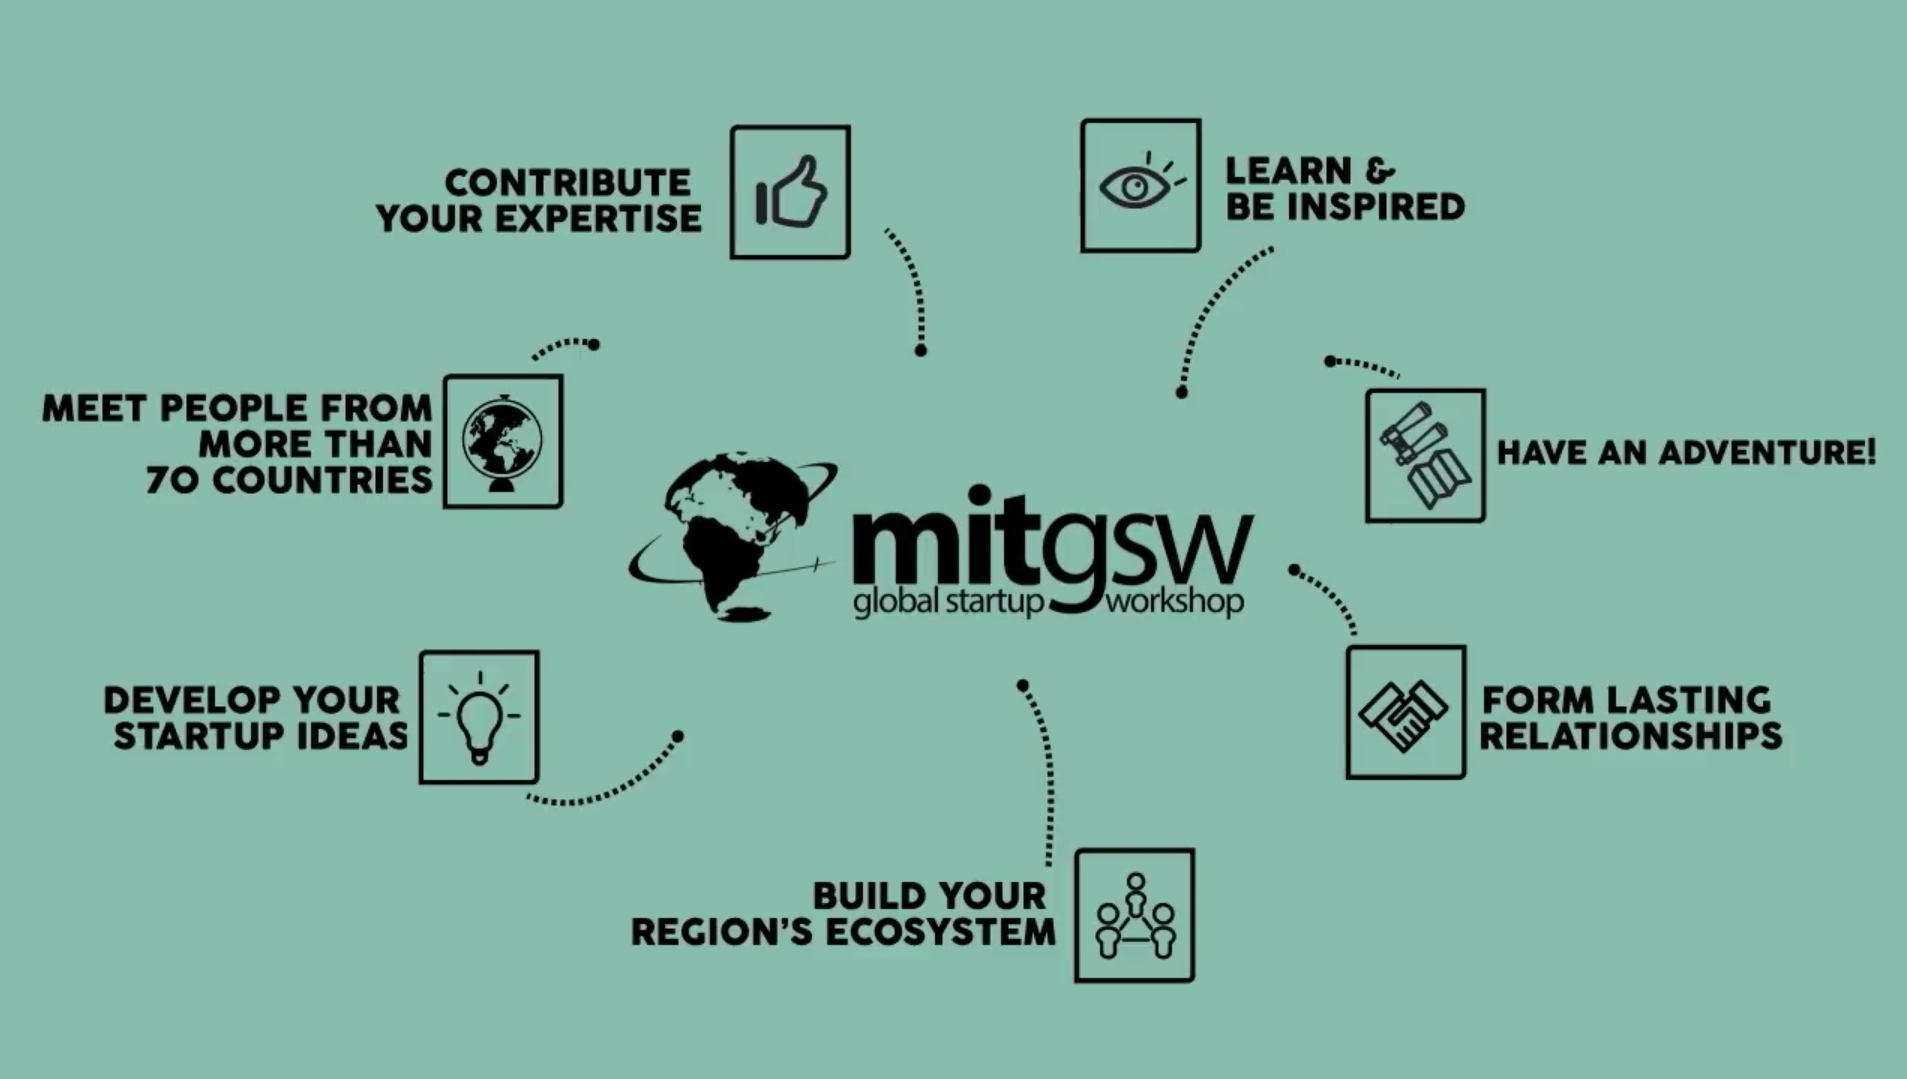 Reasons to attend MIT GSW